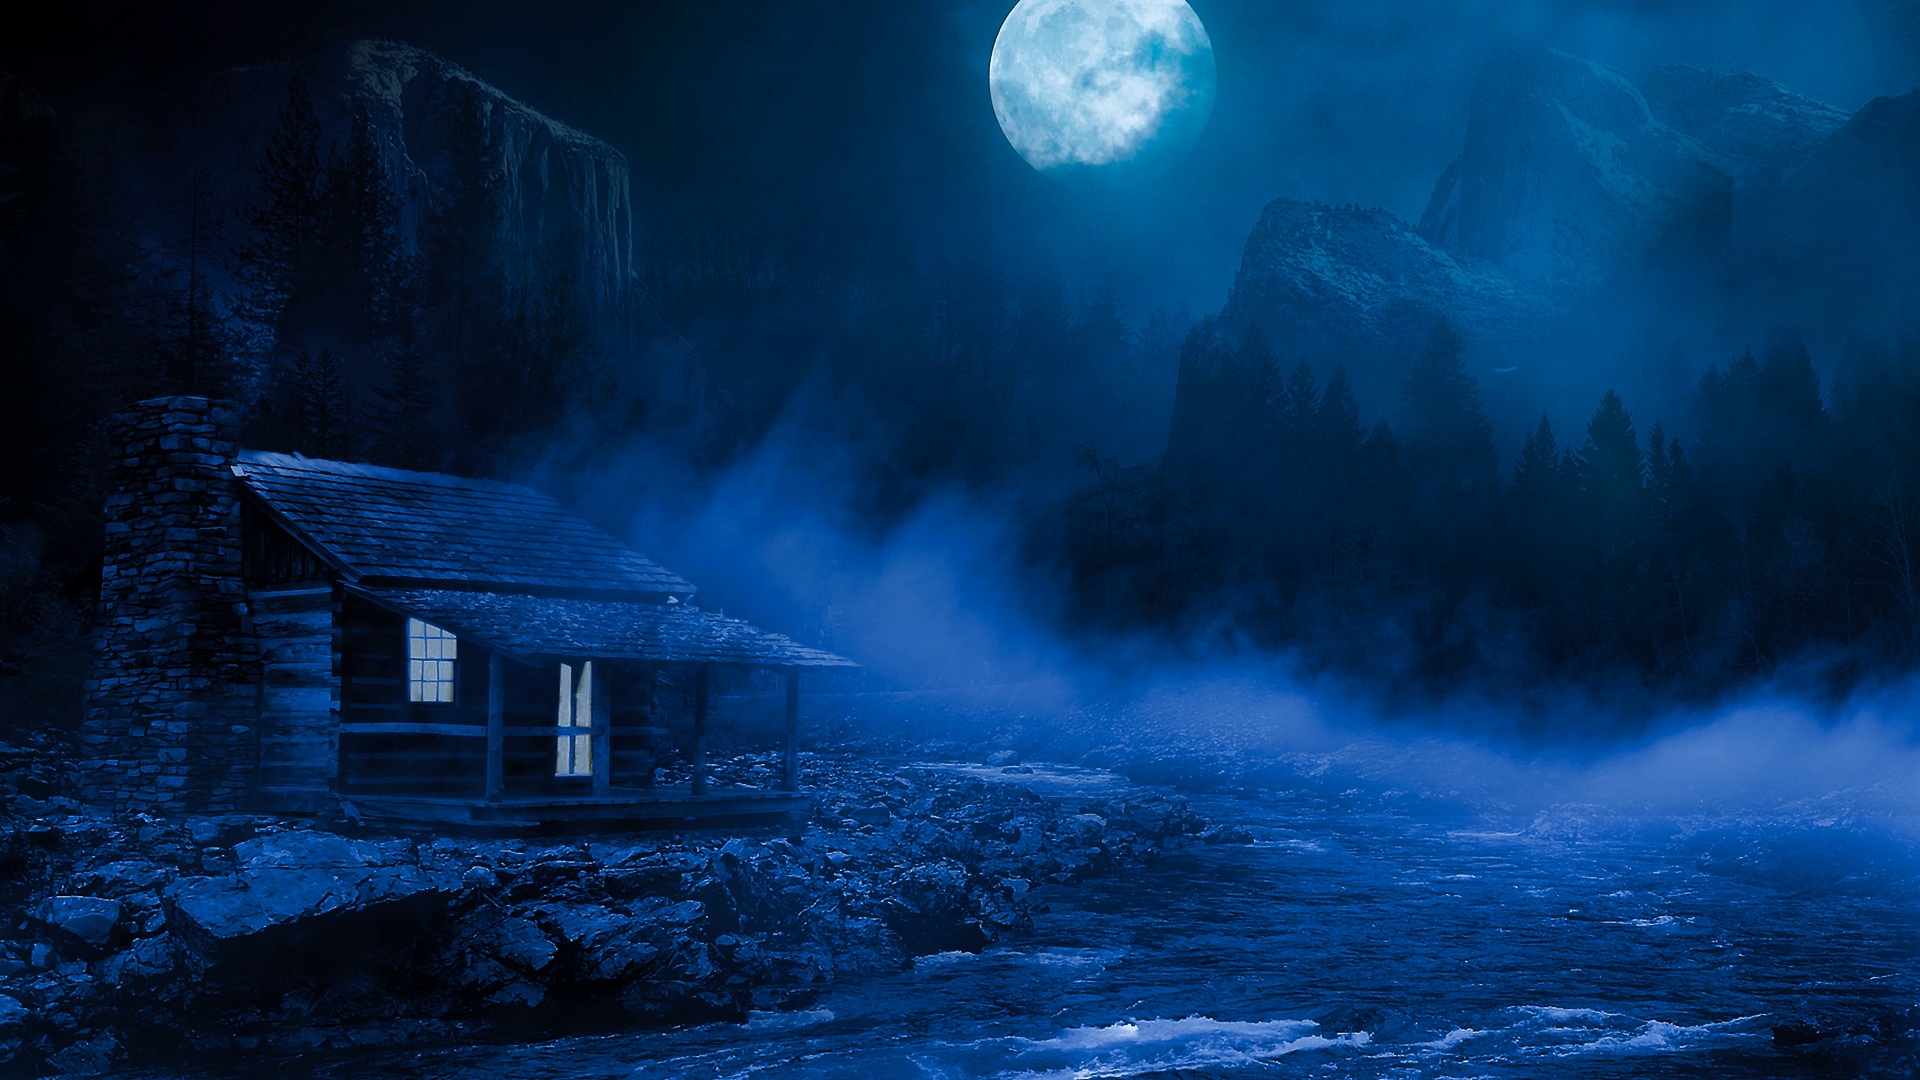  1920x1080  House Night Full Moon Fantasy Lake Flowing On 